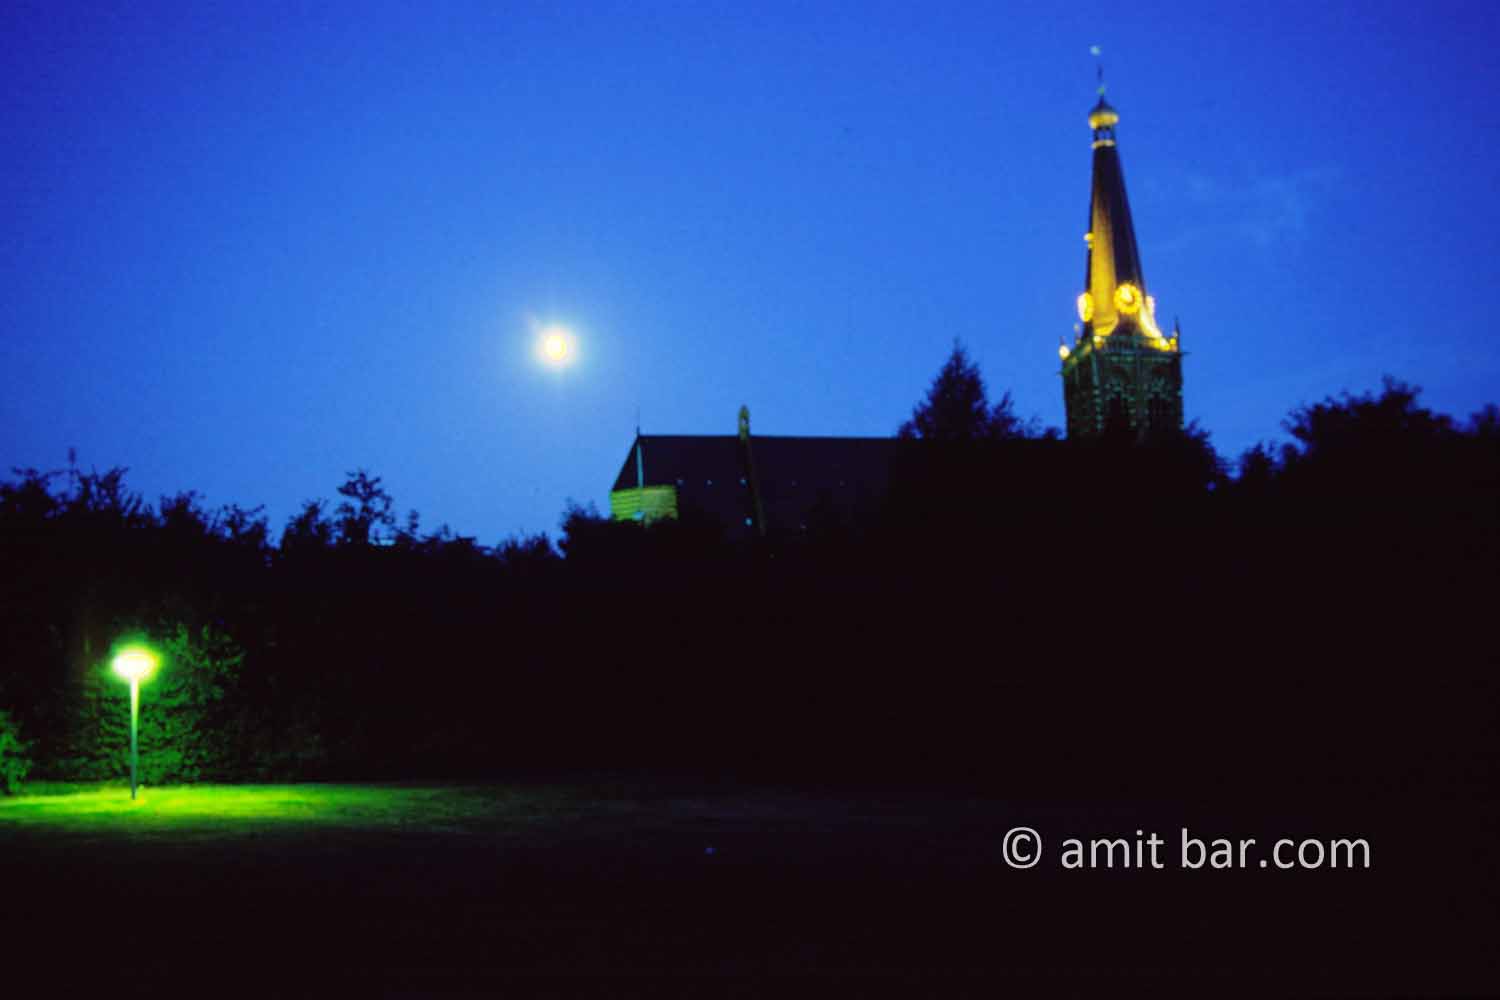 St. Catharina church by night: St. Catharina church in Doetinchem with moonlight